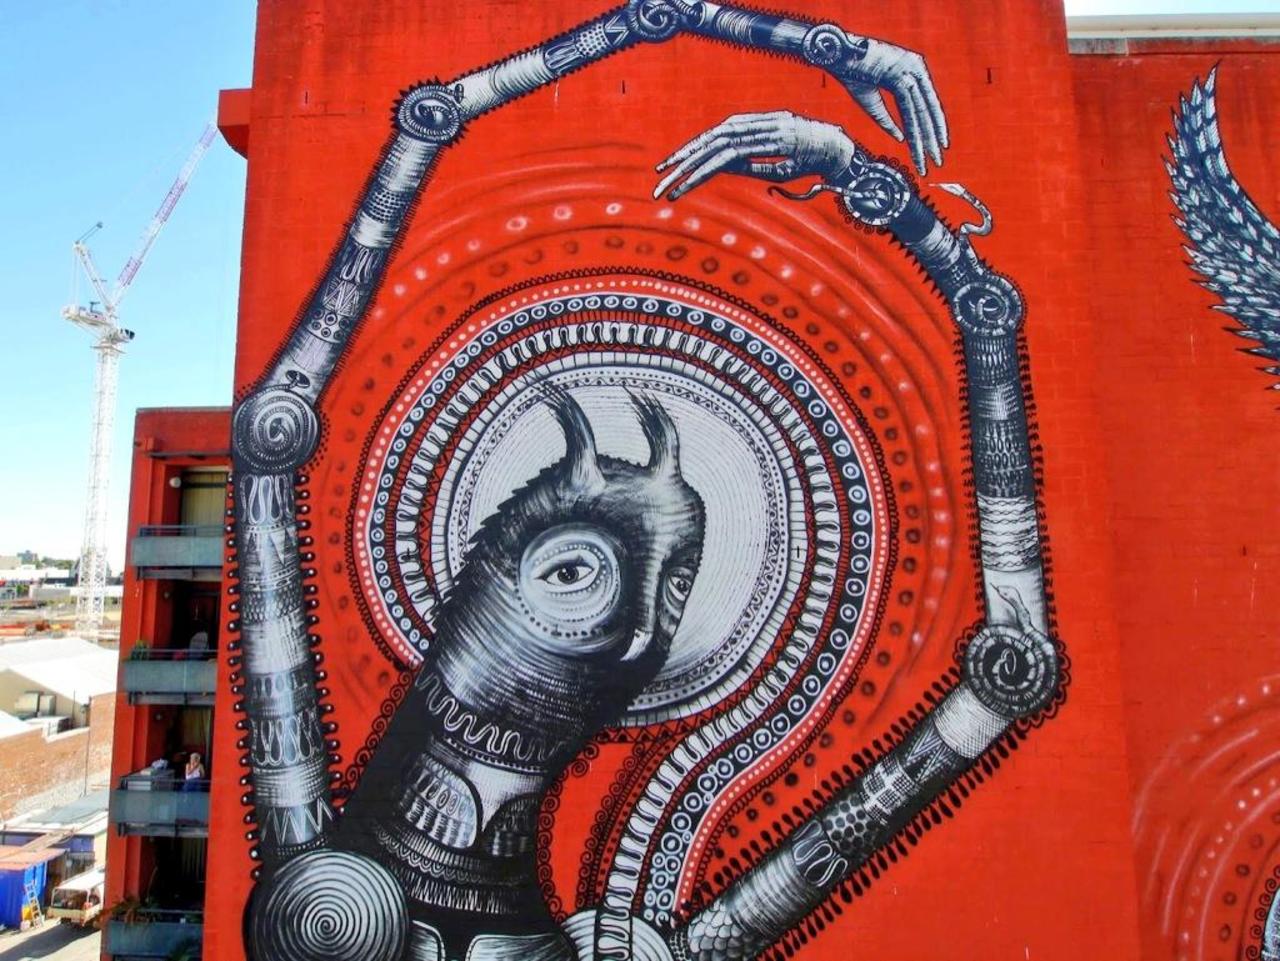 Phlegm 
Perth, Australia

#streetart #art #graffiti #urbanart http://t.co/xXK3HyEaR2